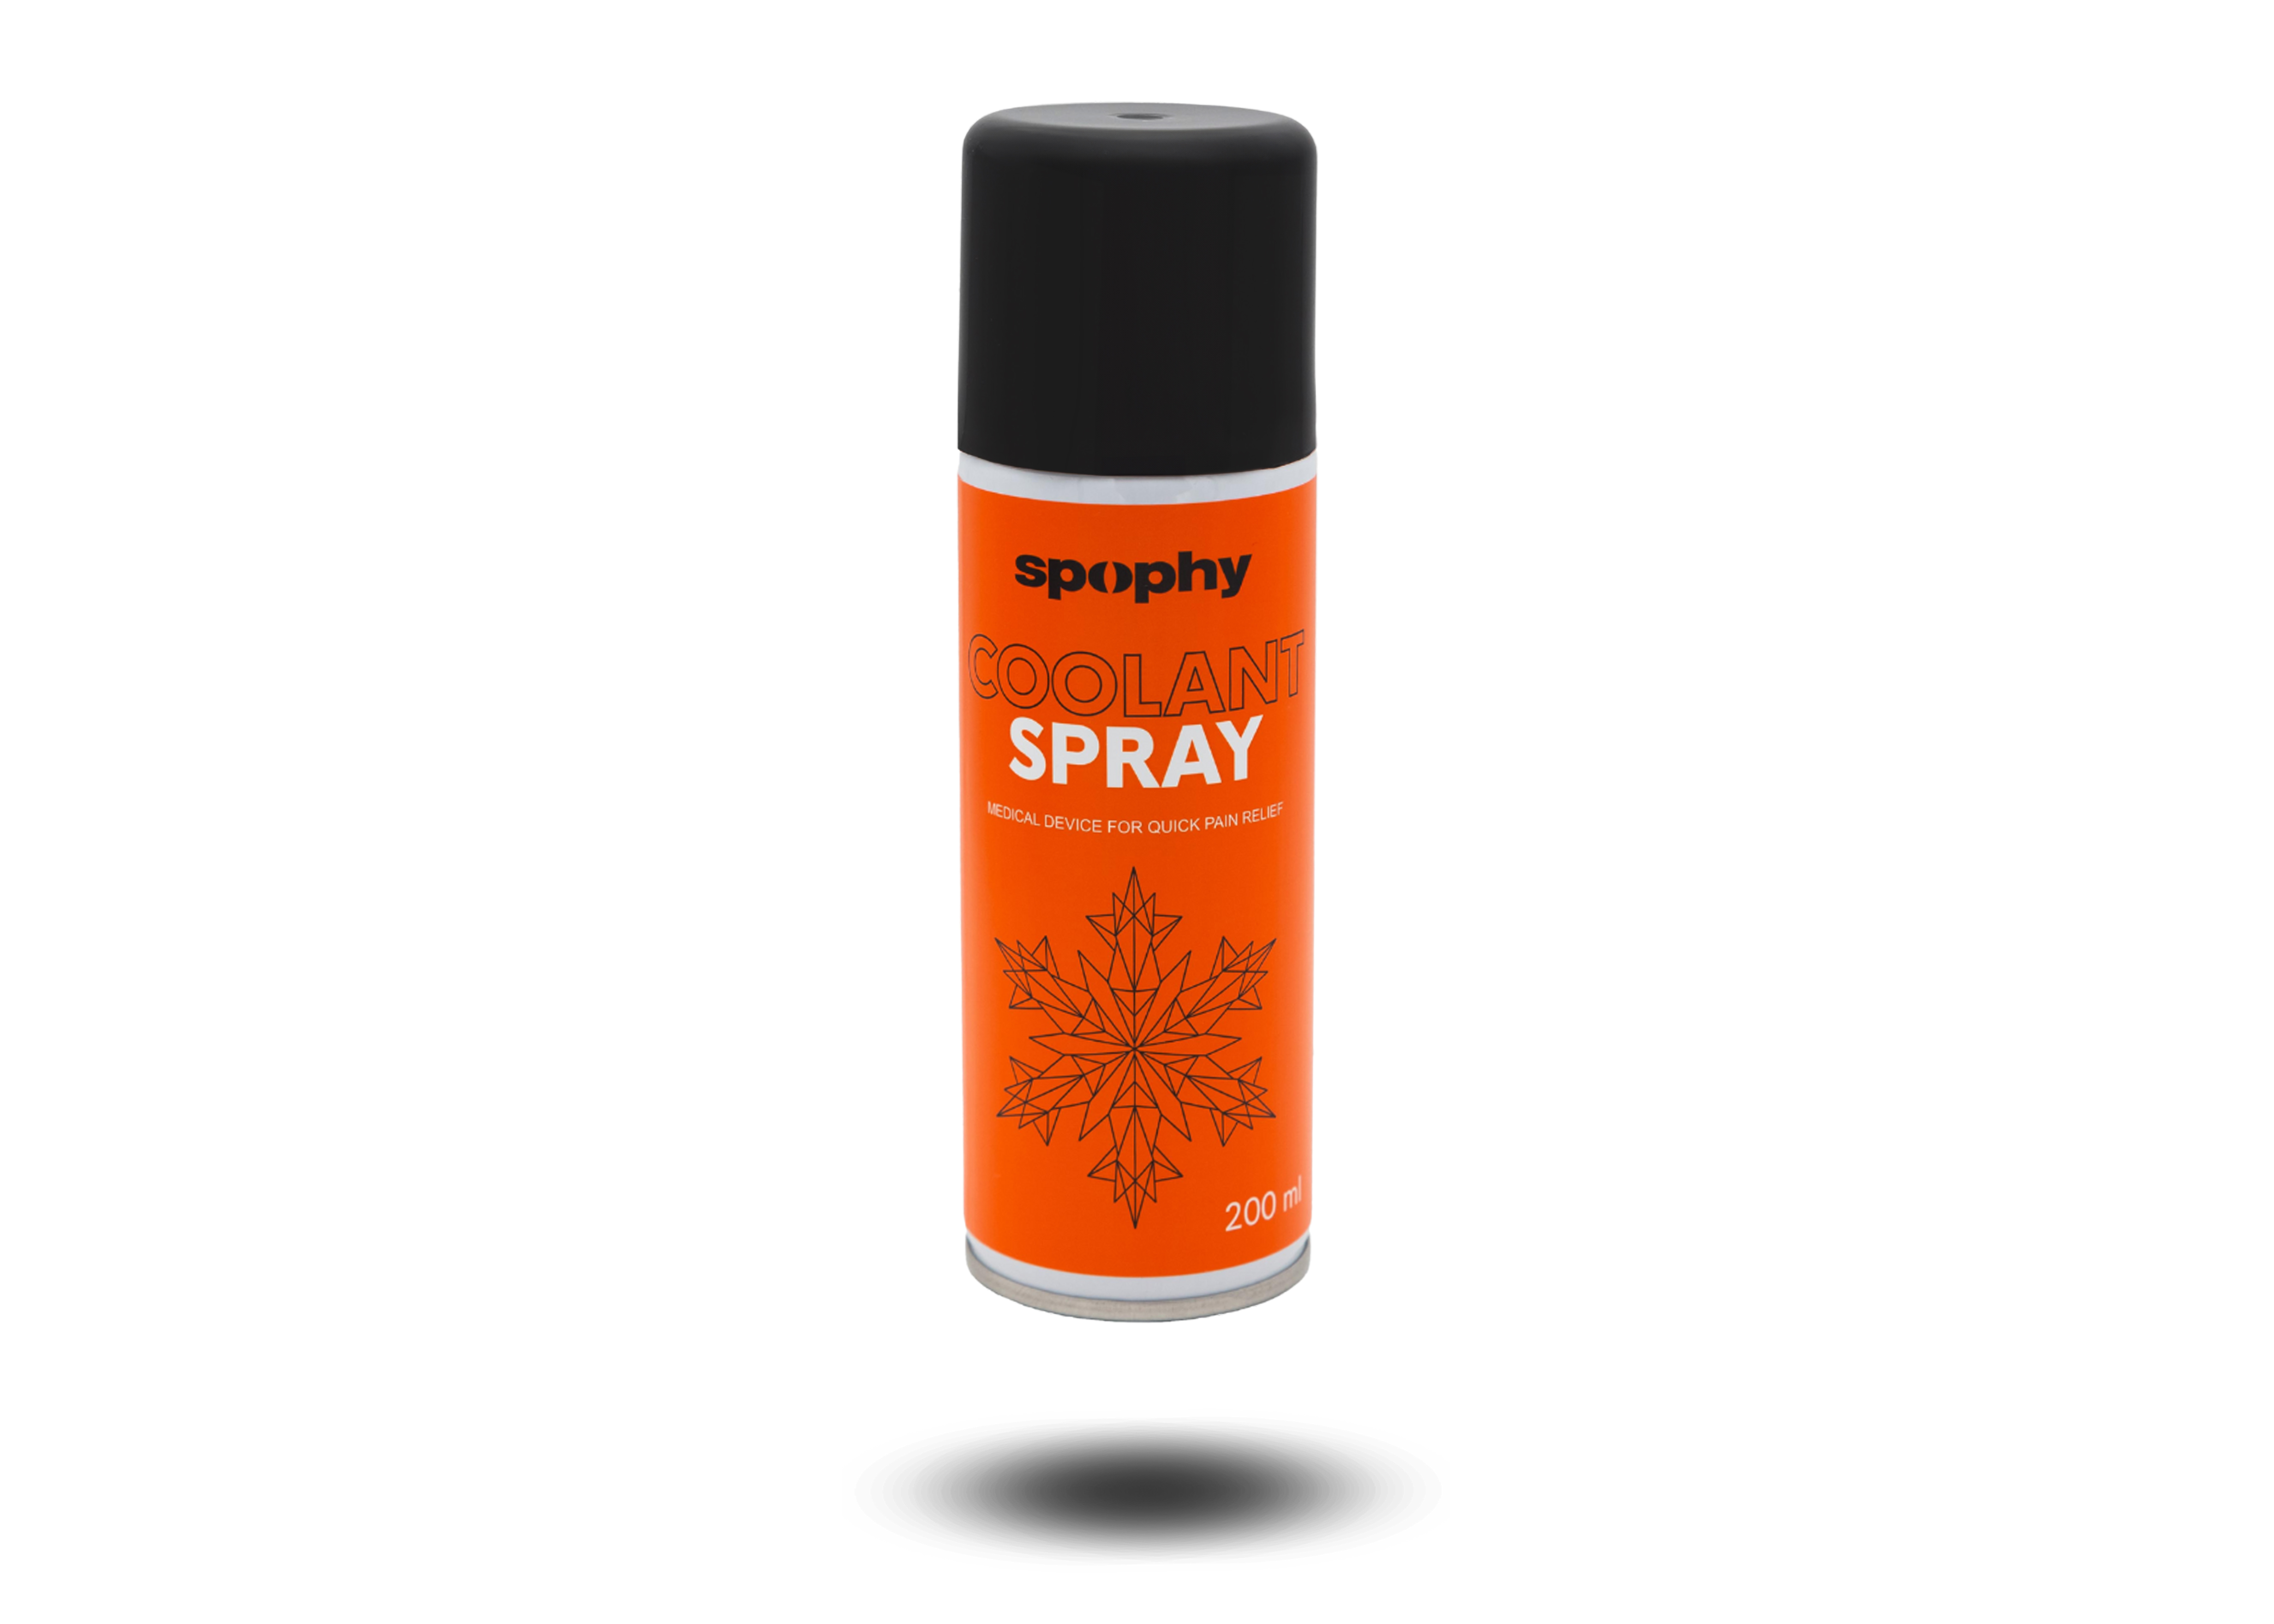 Spray_1_upraveno kopie (2)